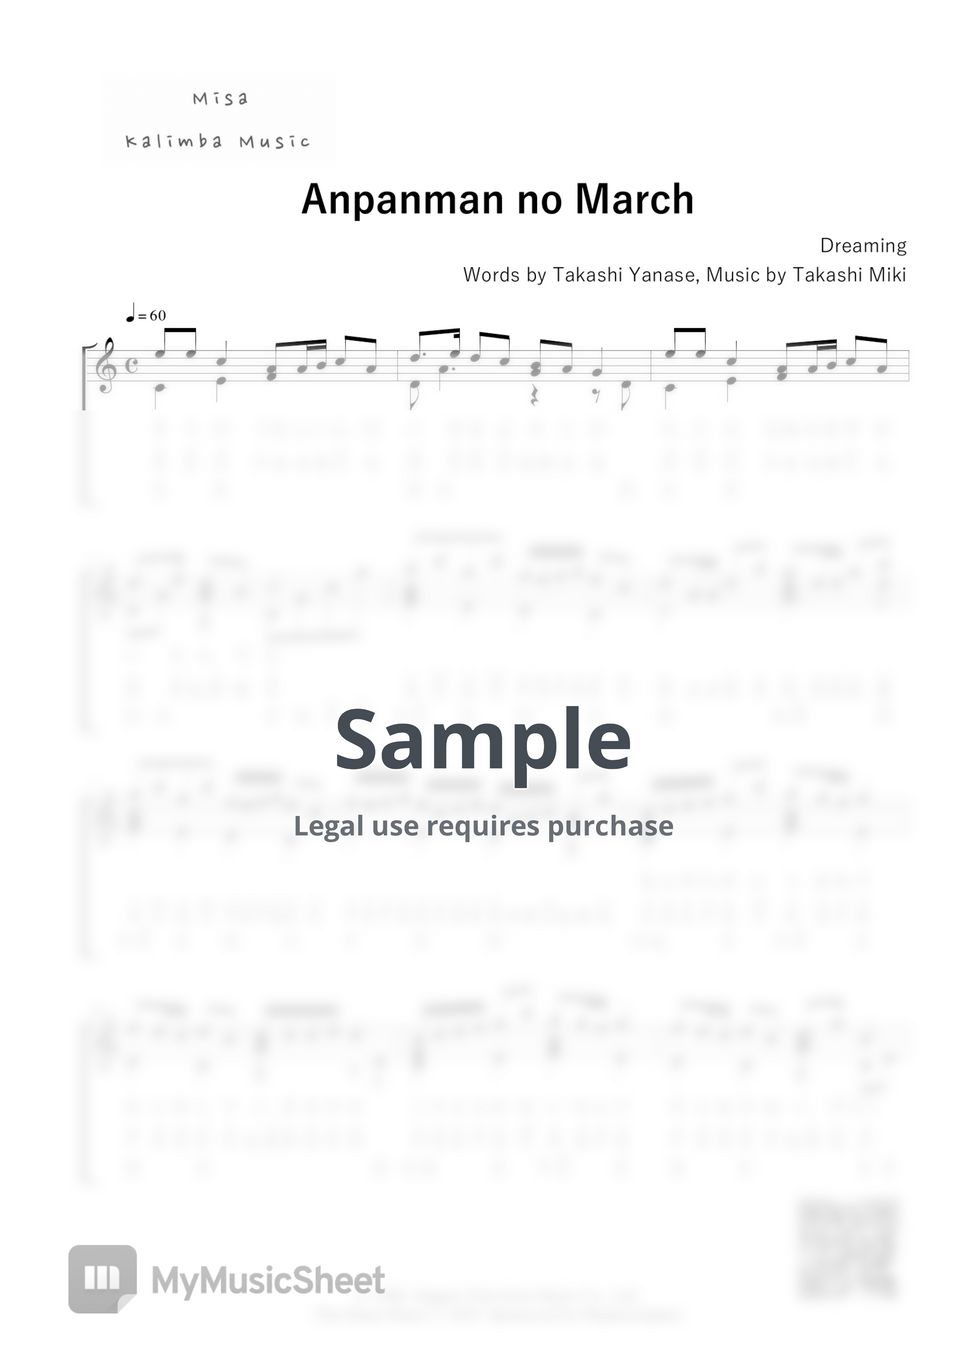 Dreaming - Anpanman no March / 17 keys kalimba / Letter Notation by Misa / Kalimba Music